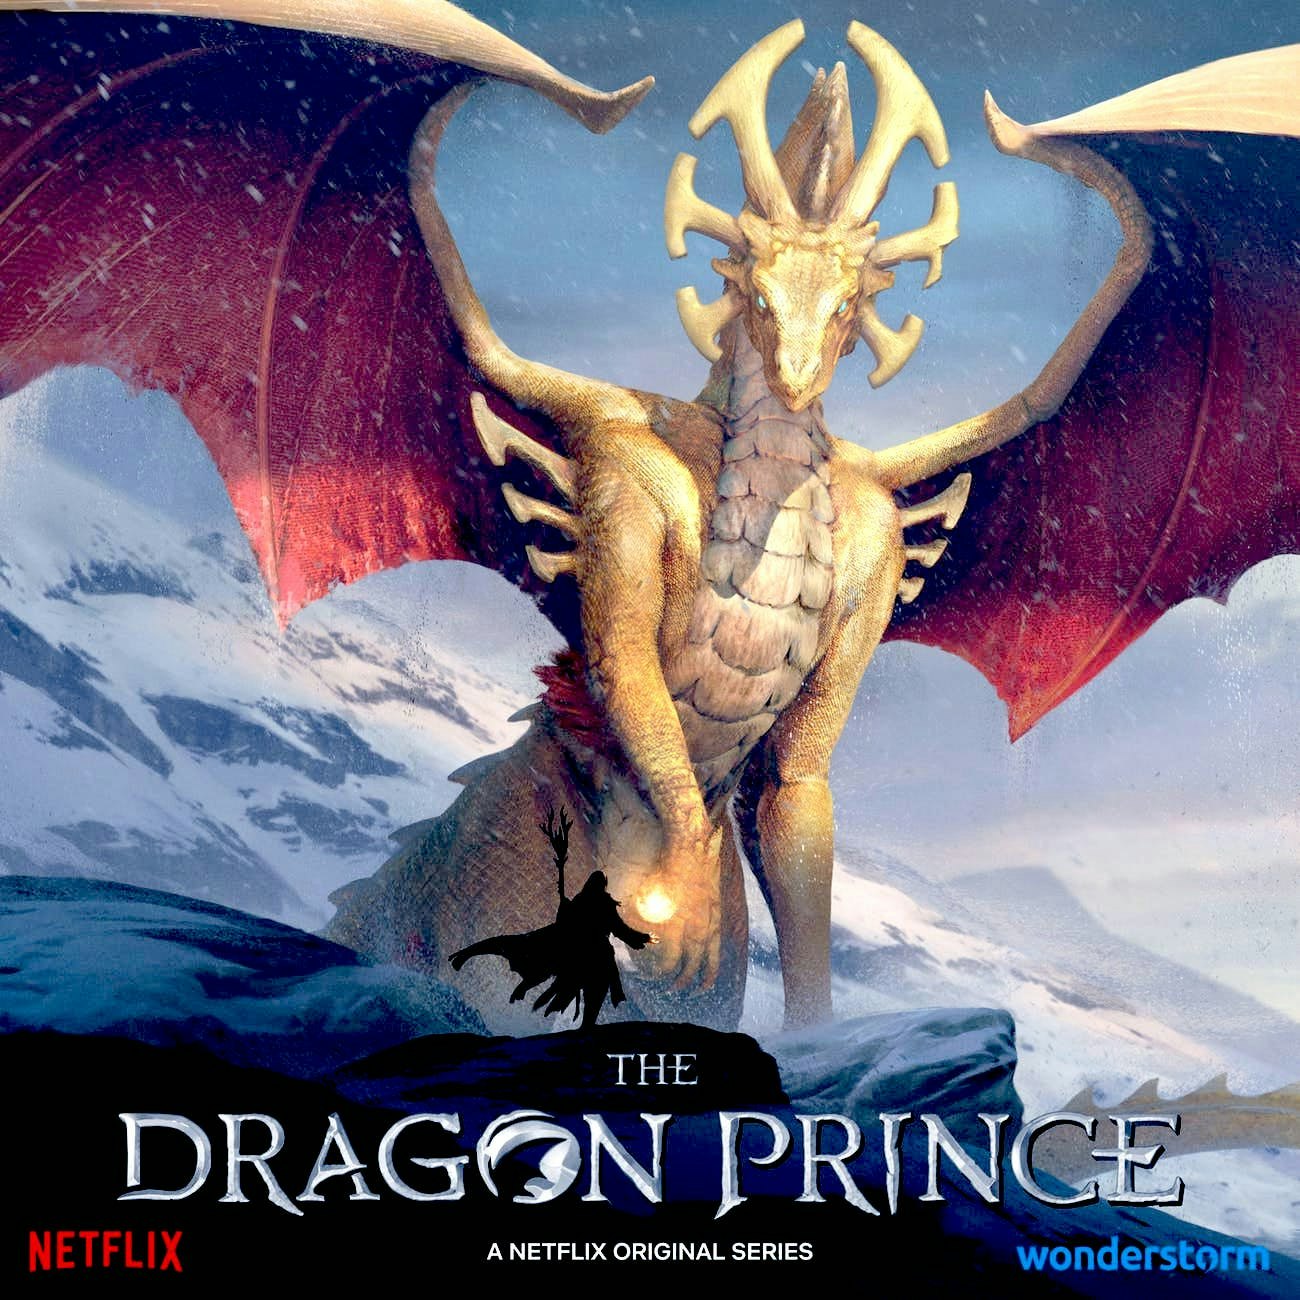 the dragon prince season 1 makes me ill